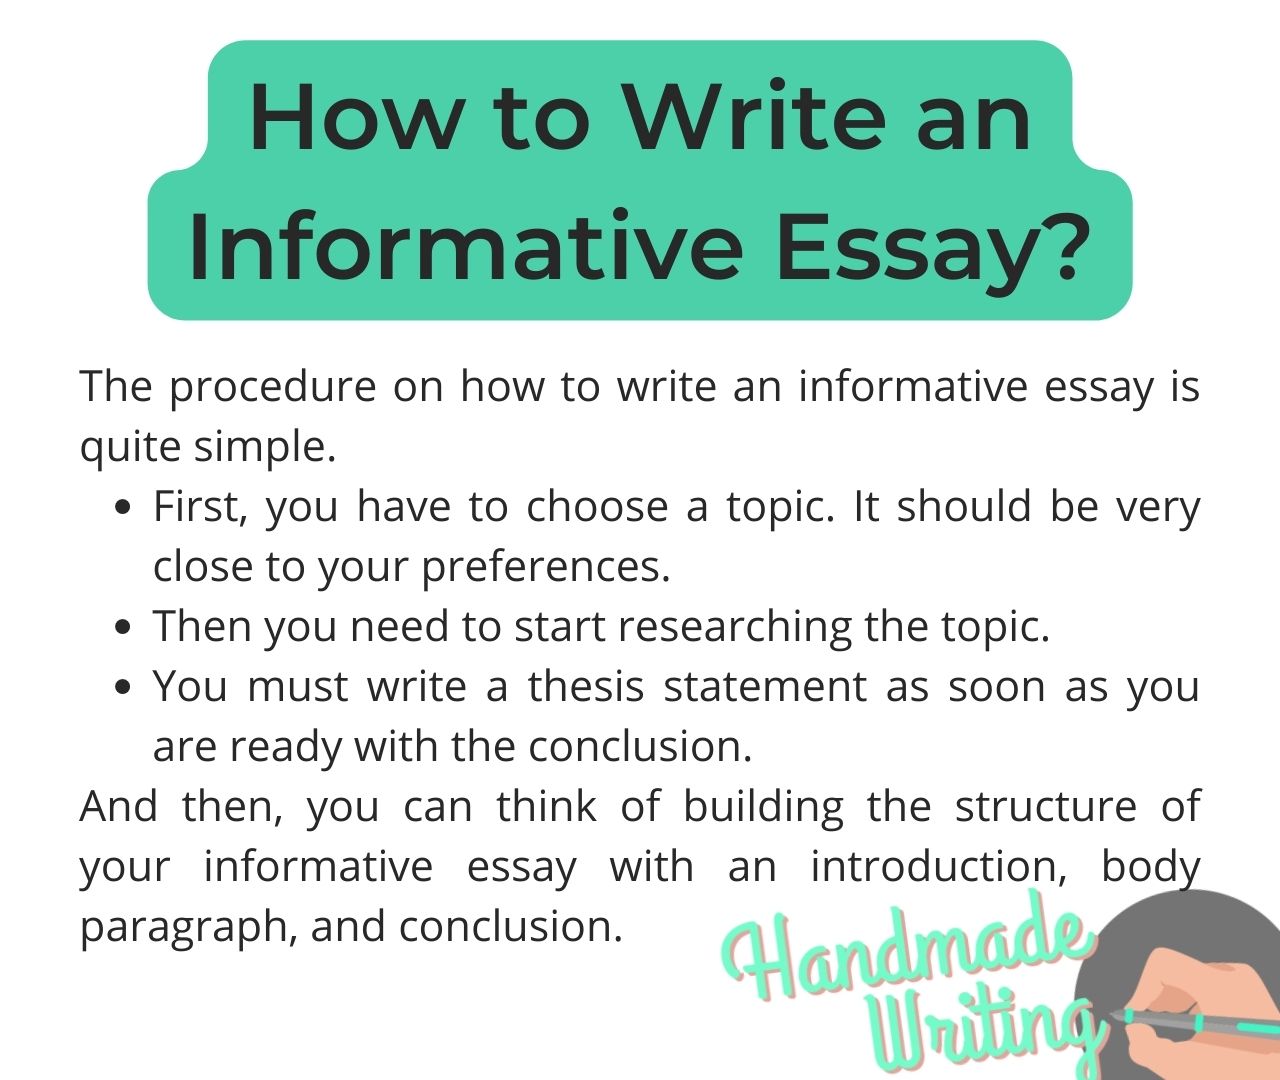 informative essay layout